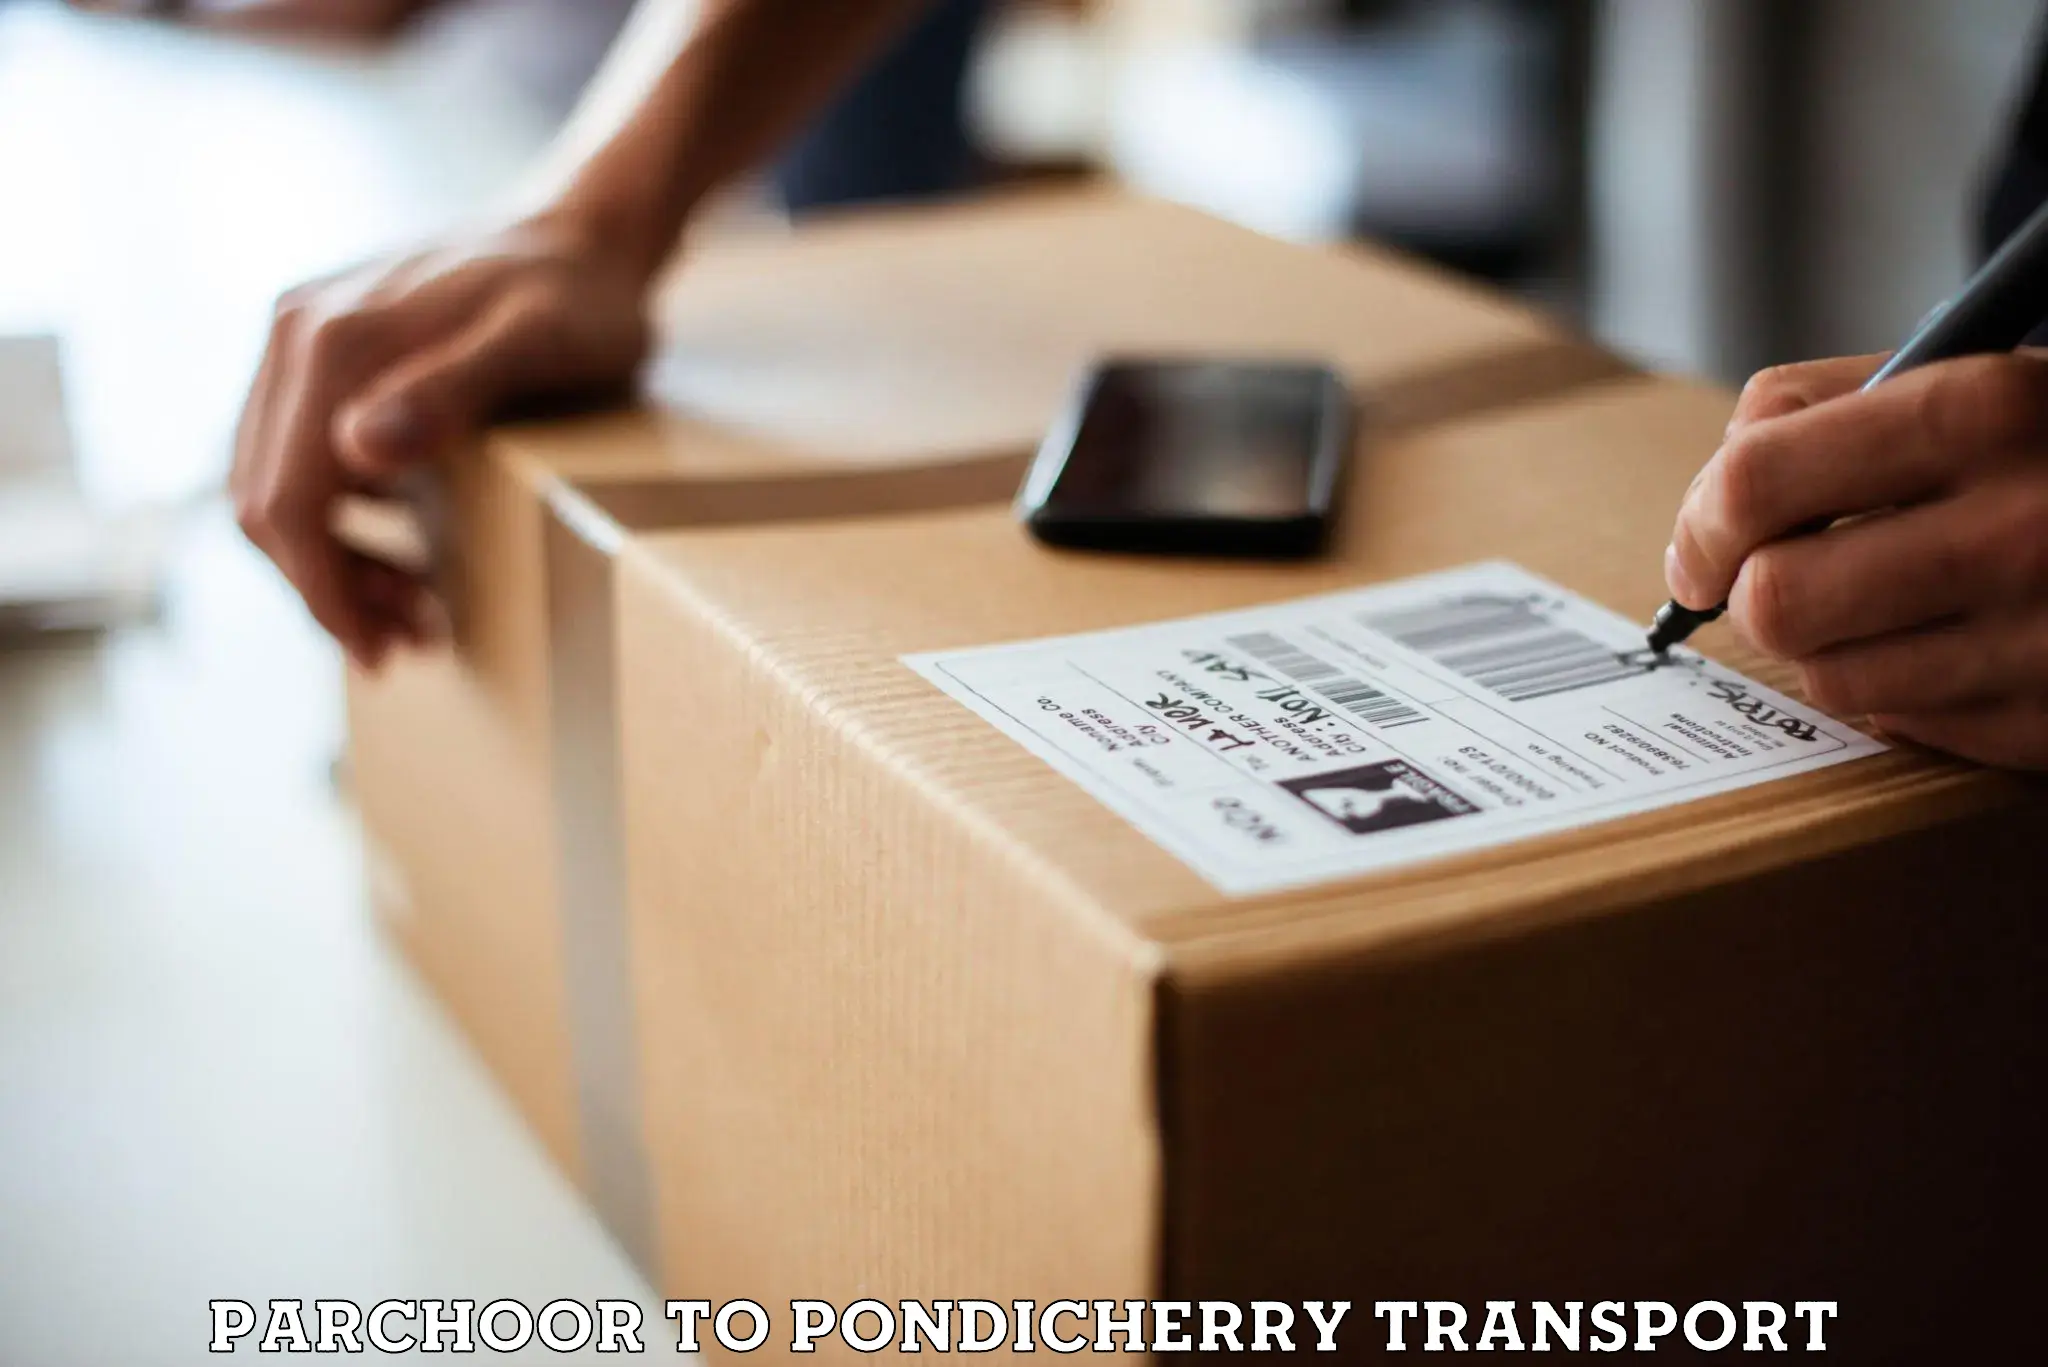 Container transport service Parchoor to Pondicherry University